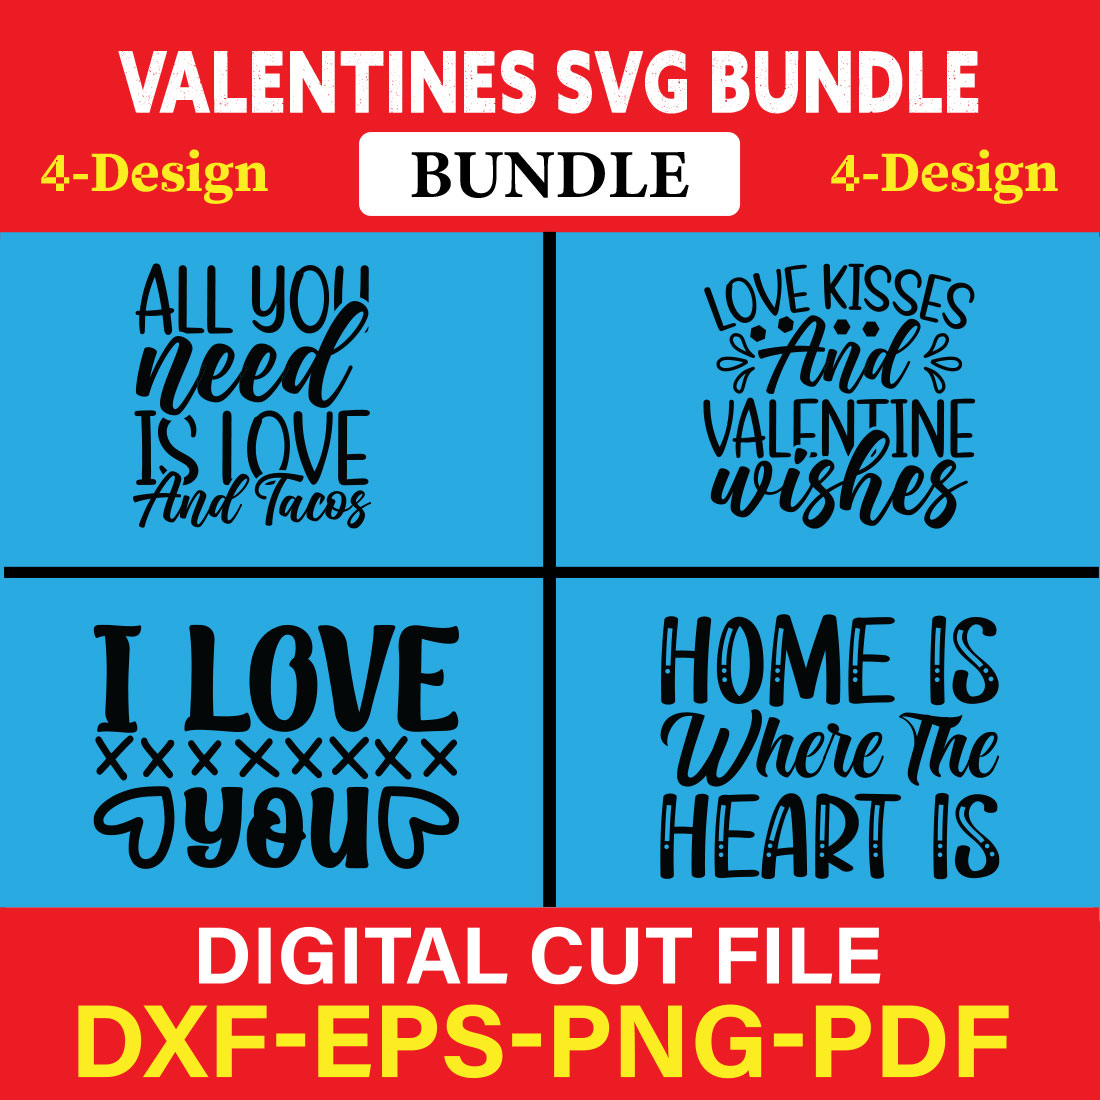 Valentines T-shirt Design Bundle Vol-38 cover image.